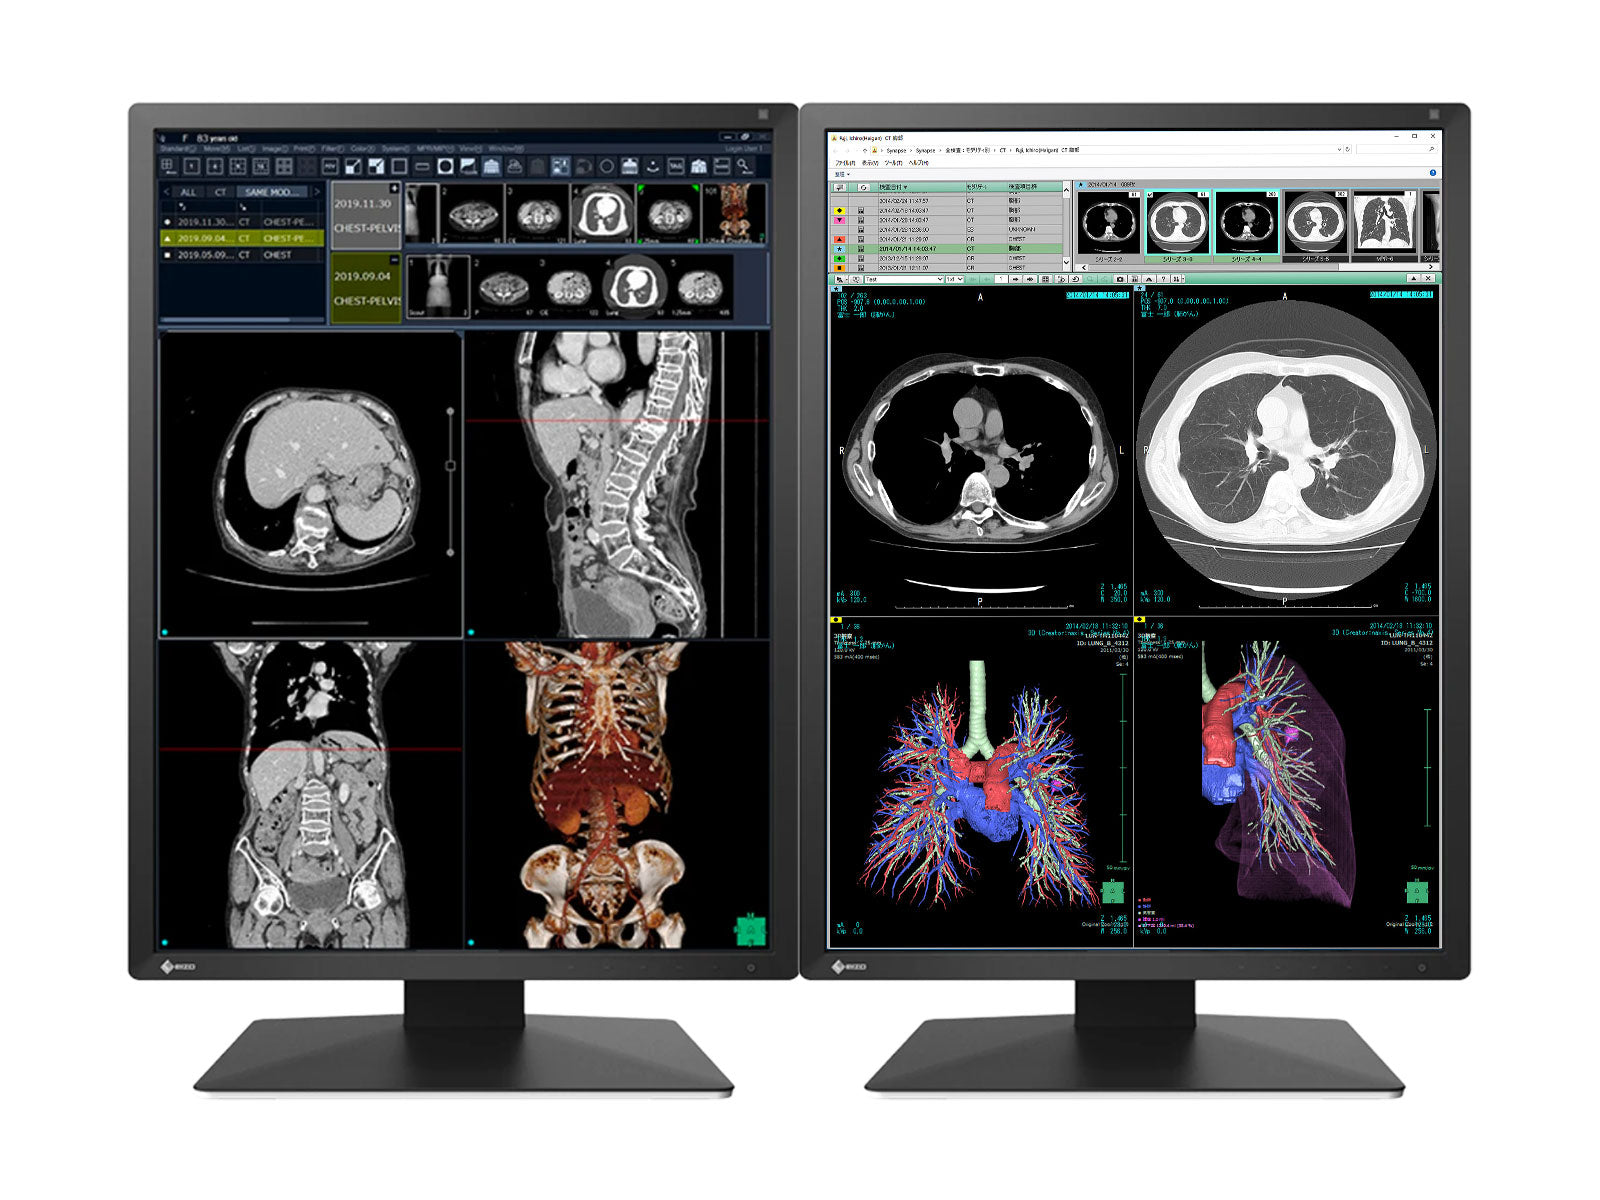 Eizo RadiForce RX270 2MP 21" Farb-LED-Monitor für medizinische Diagnostik und Radiologie (RX270-BK)